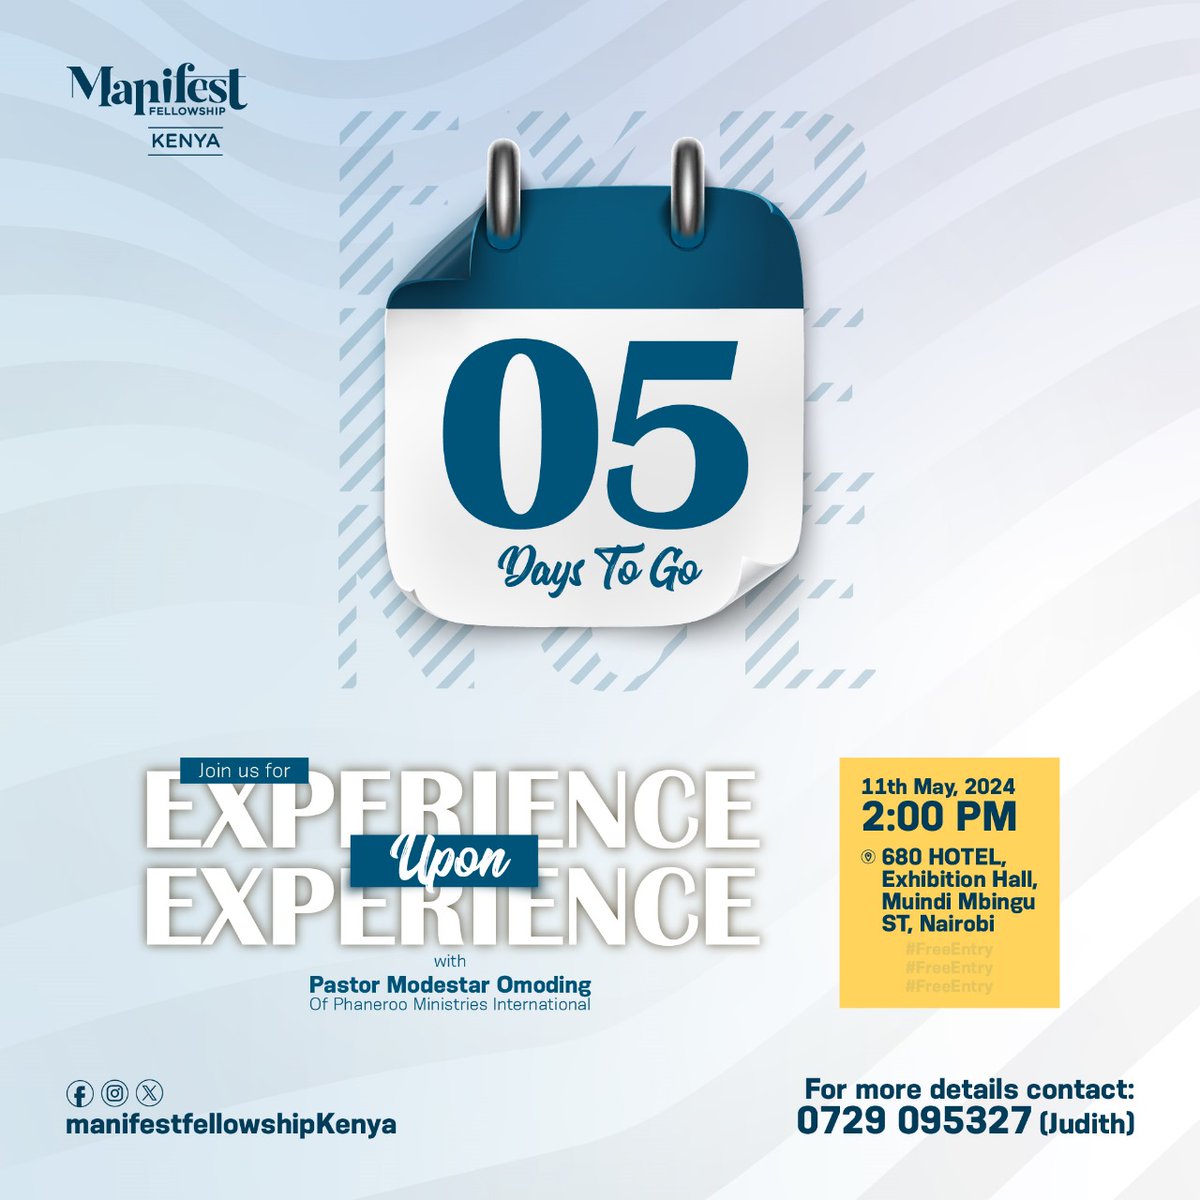 #ExperienceUponExperience
#BringAFriend